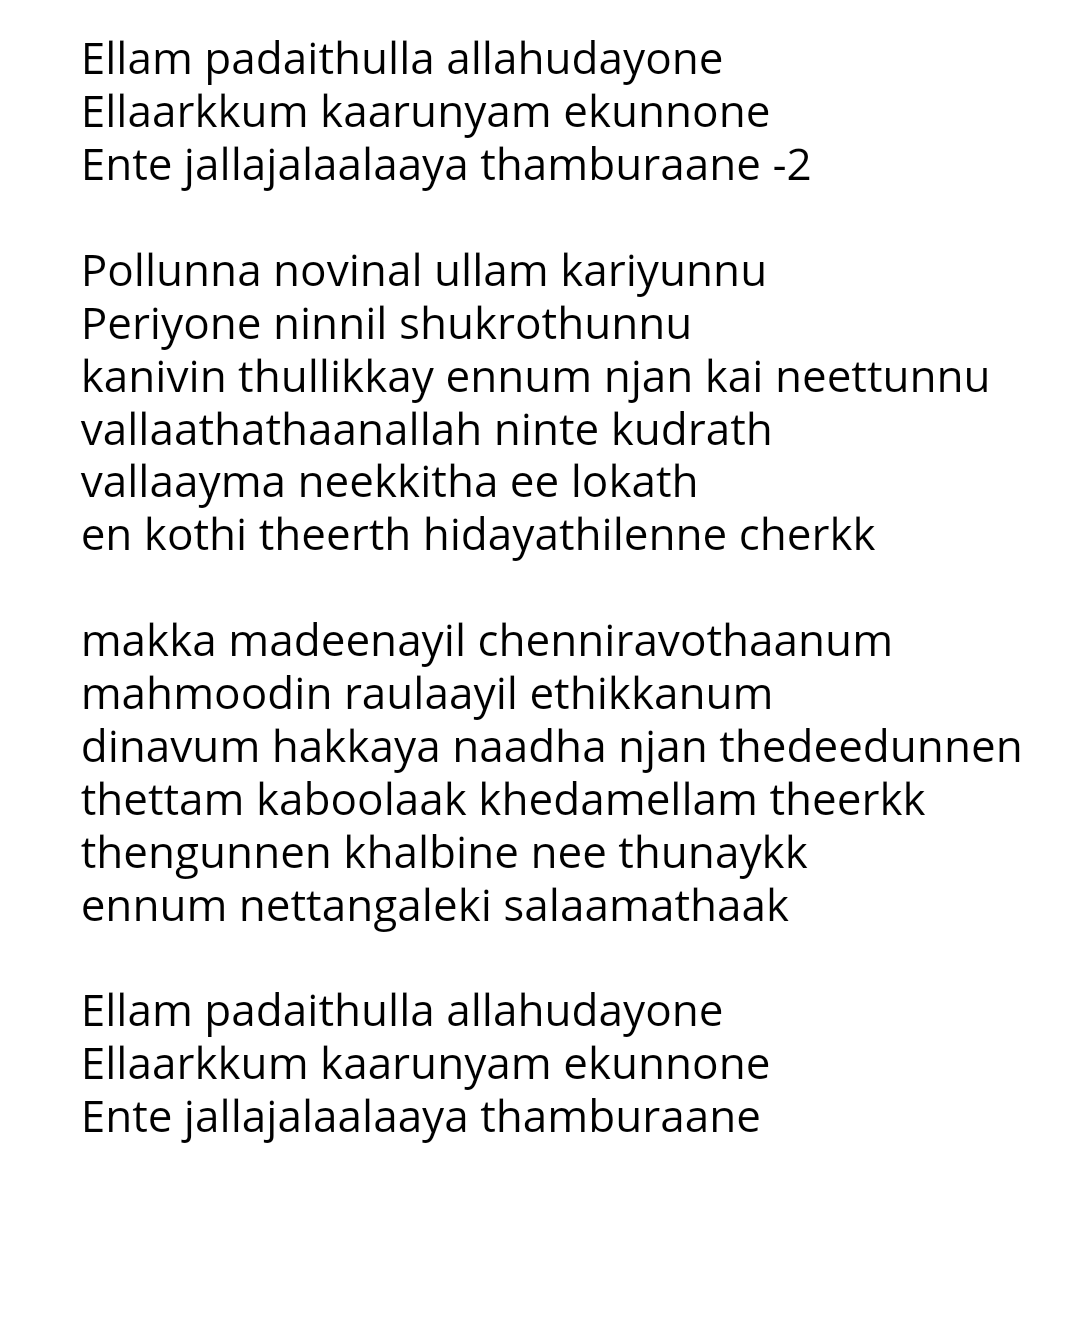 Ellam padaithulla lyrics